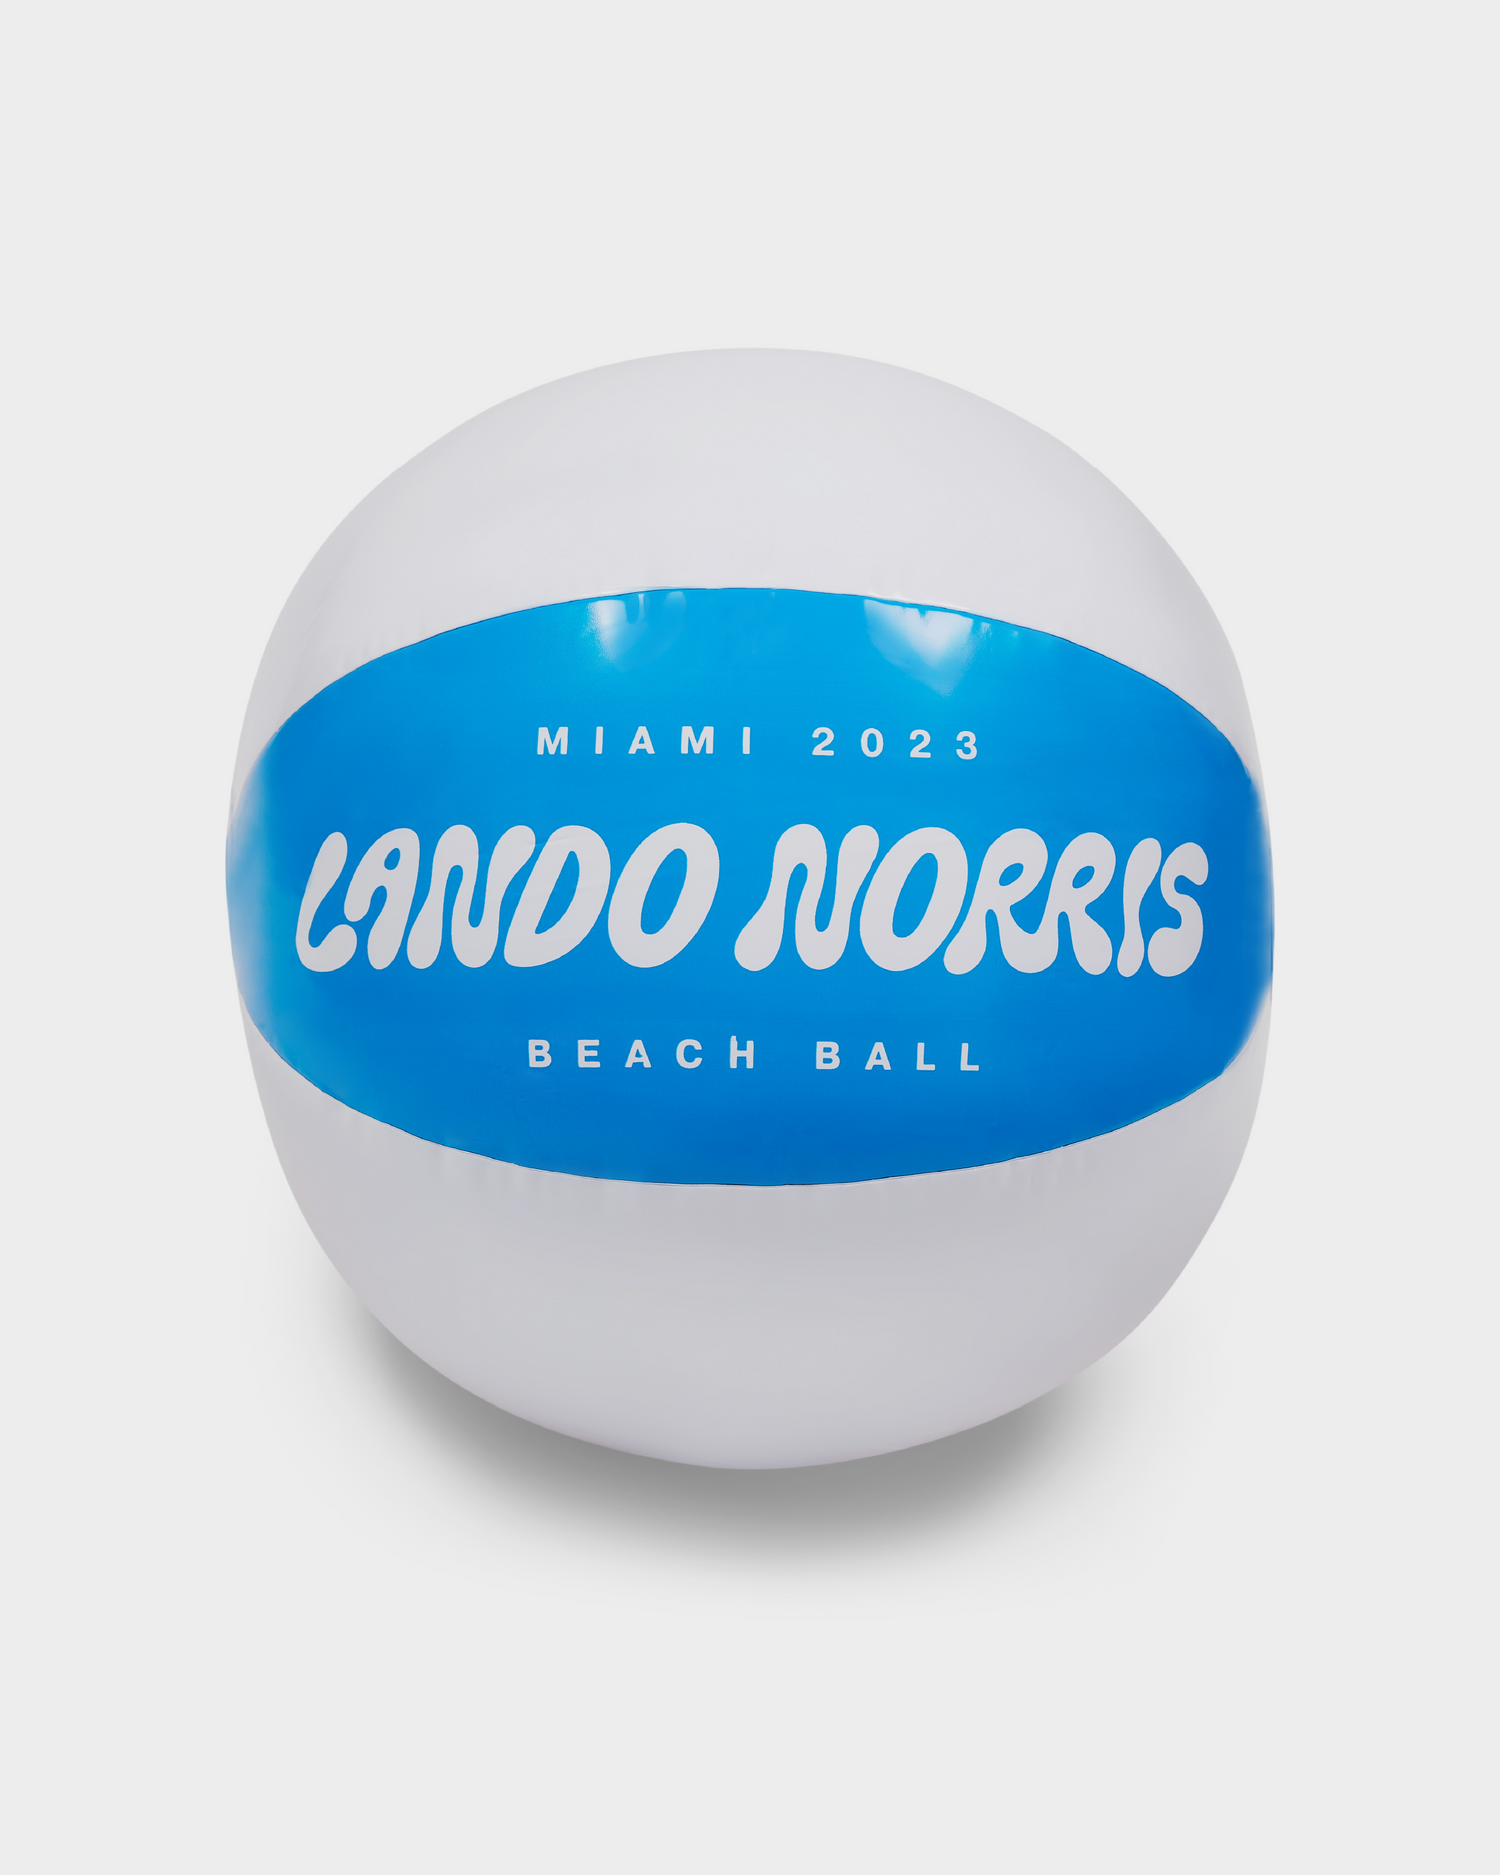 Miami 2023 | Collection